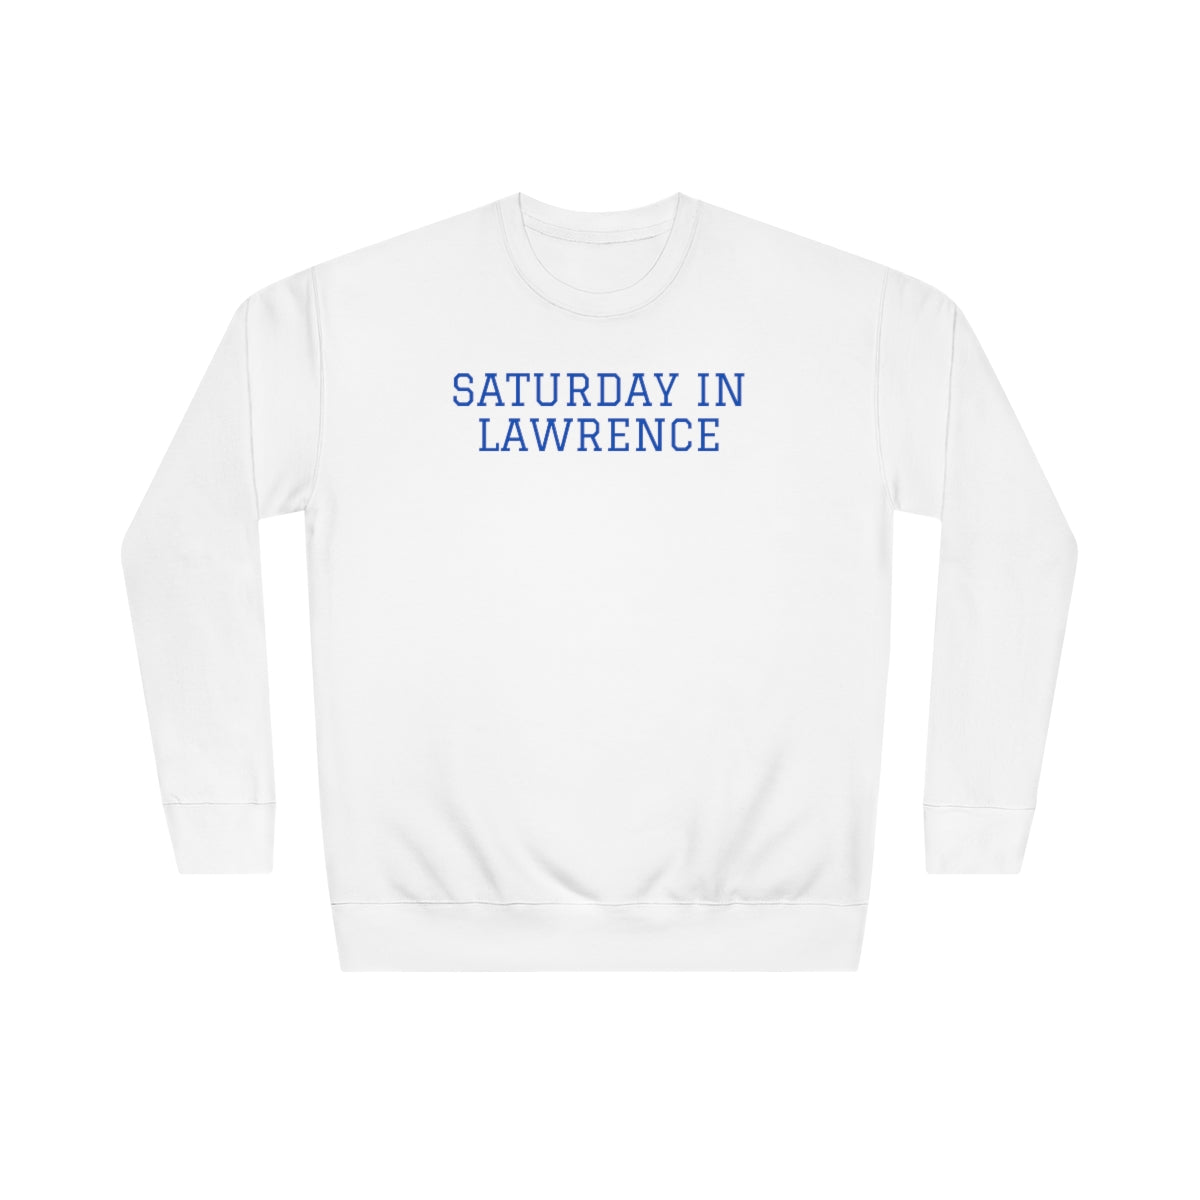 Kansas Crew Sweatshirt - GG - CH